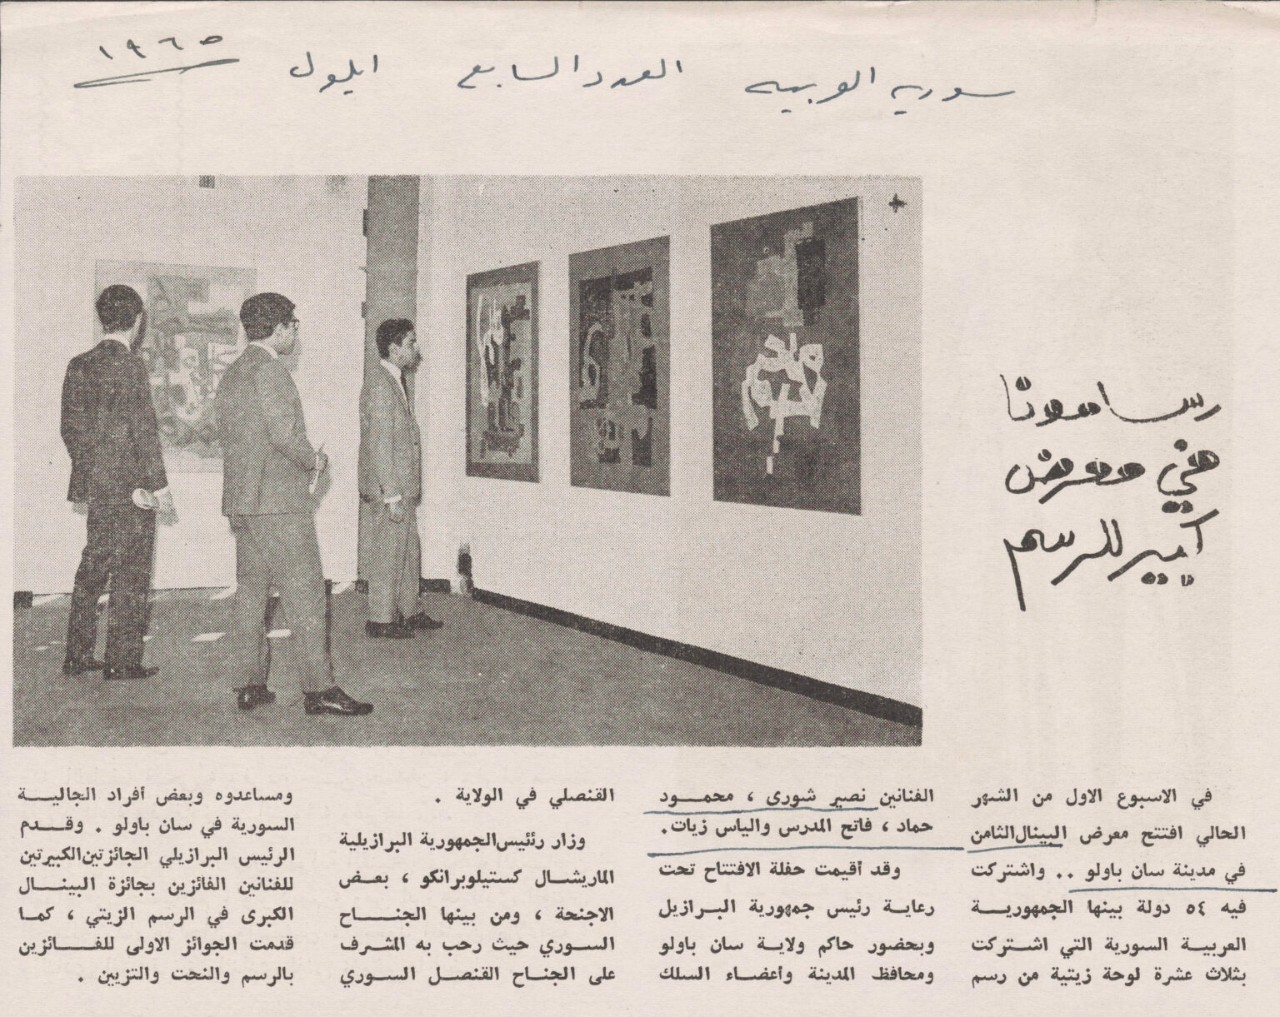 Preservation of a broken glass plate negative by al Mawrid archivist, Ibrahim Mohamed Ali